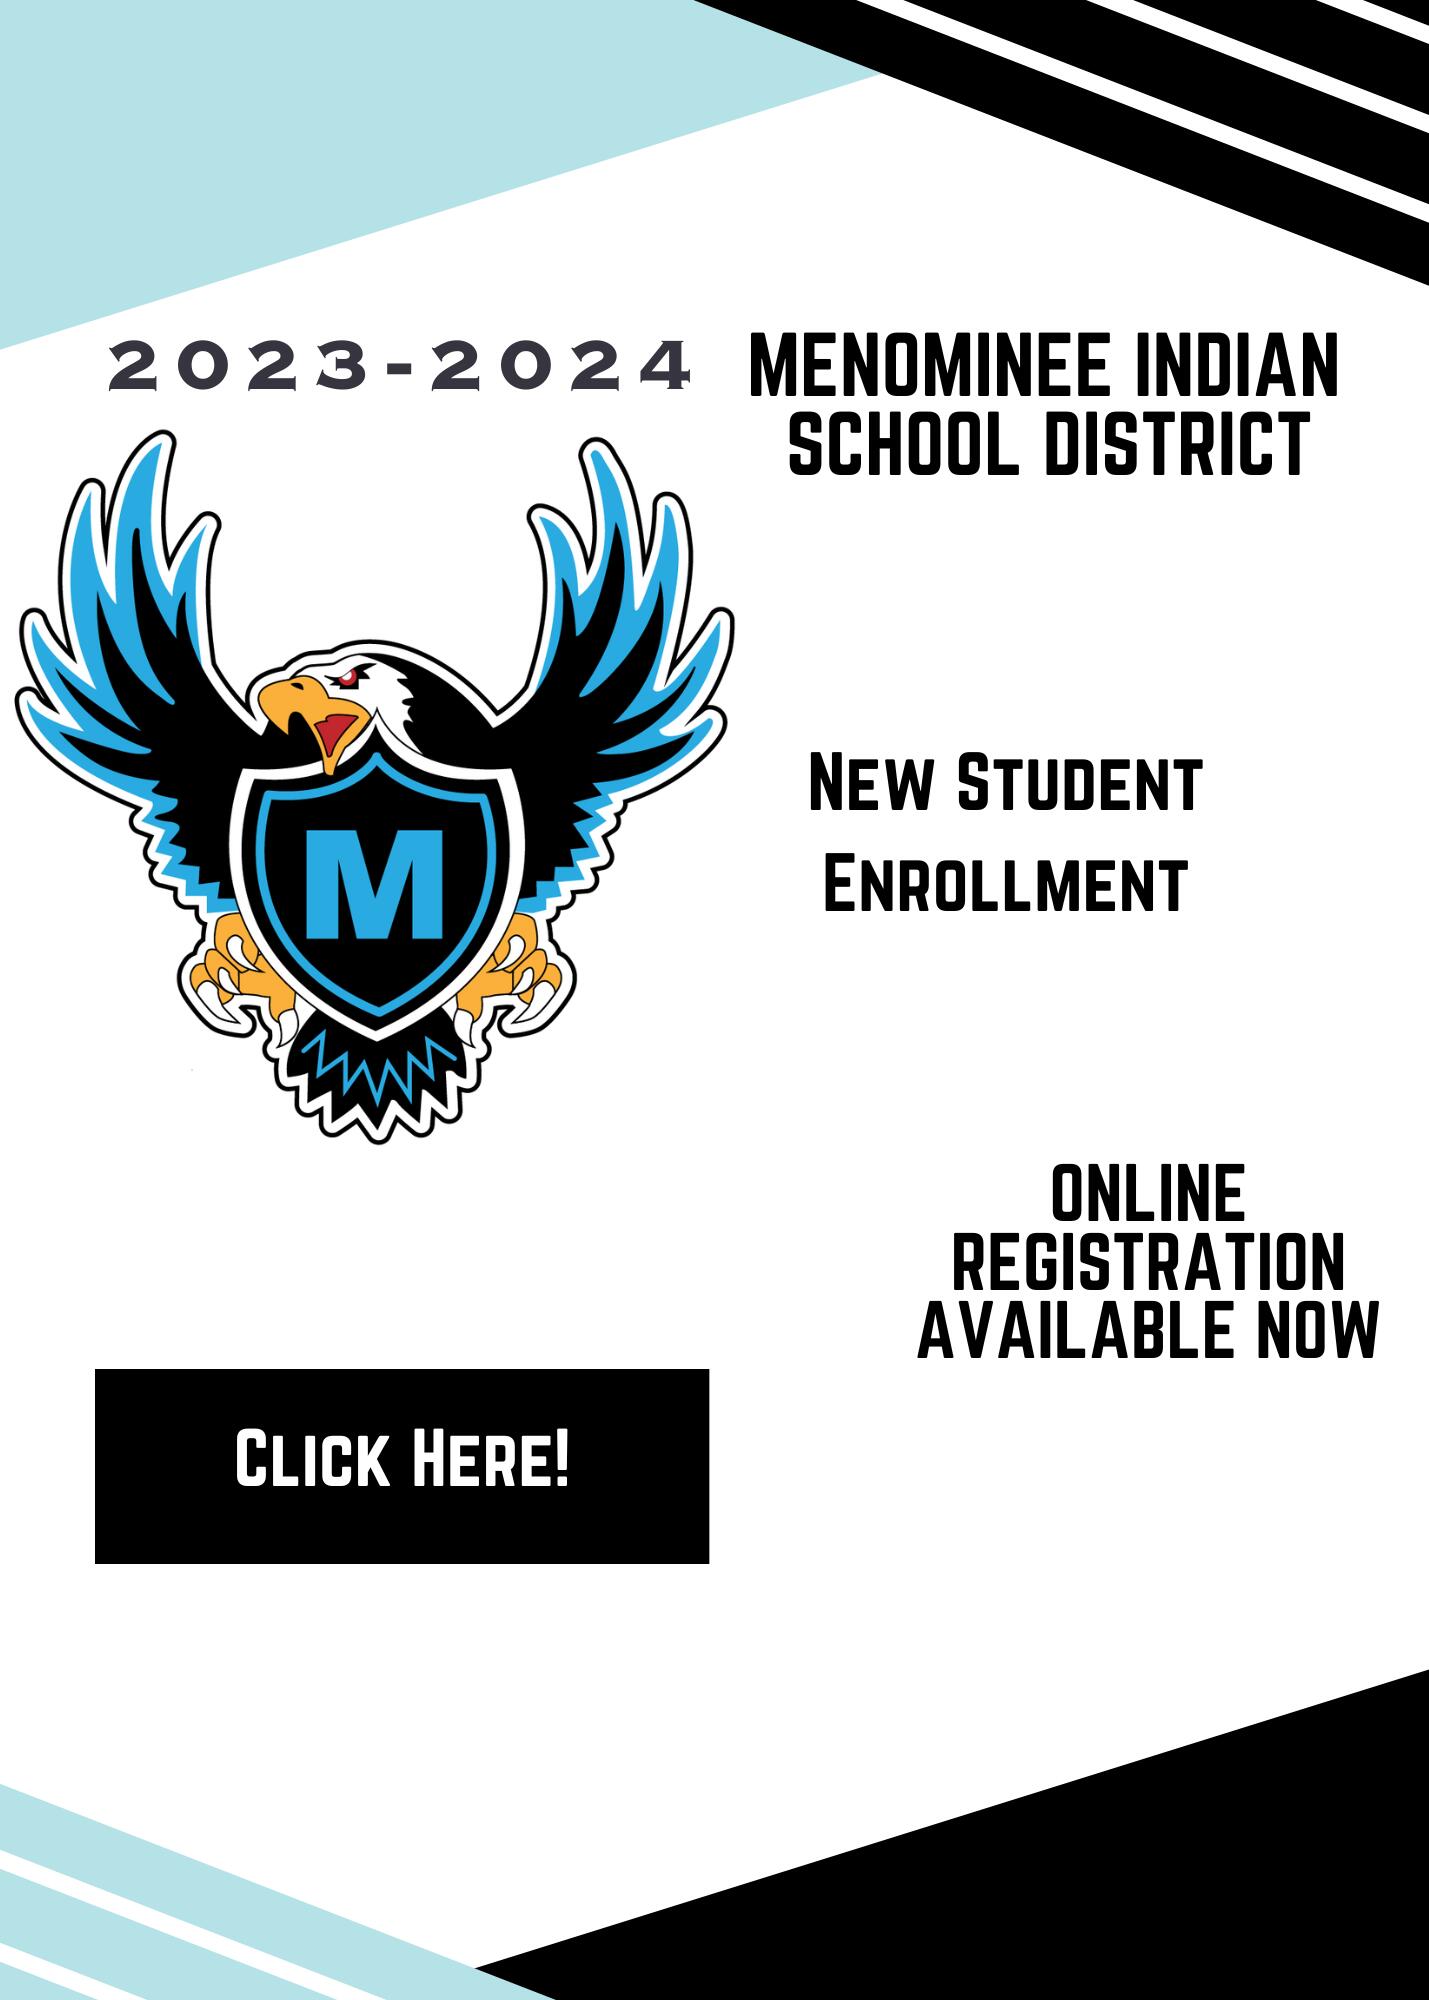 New Student Online Registration